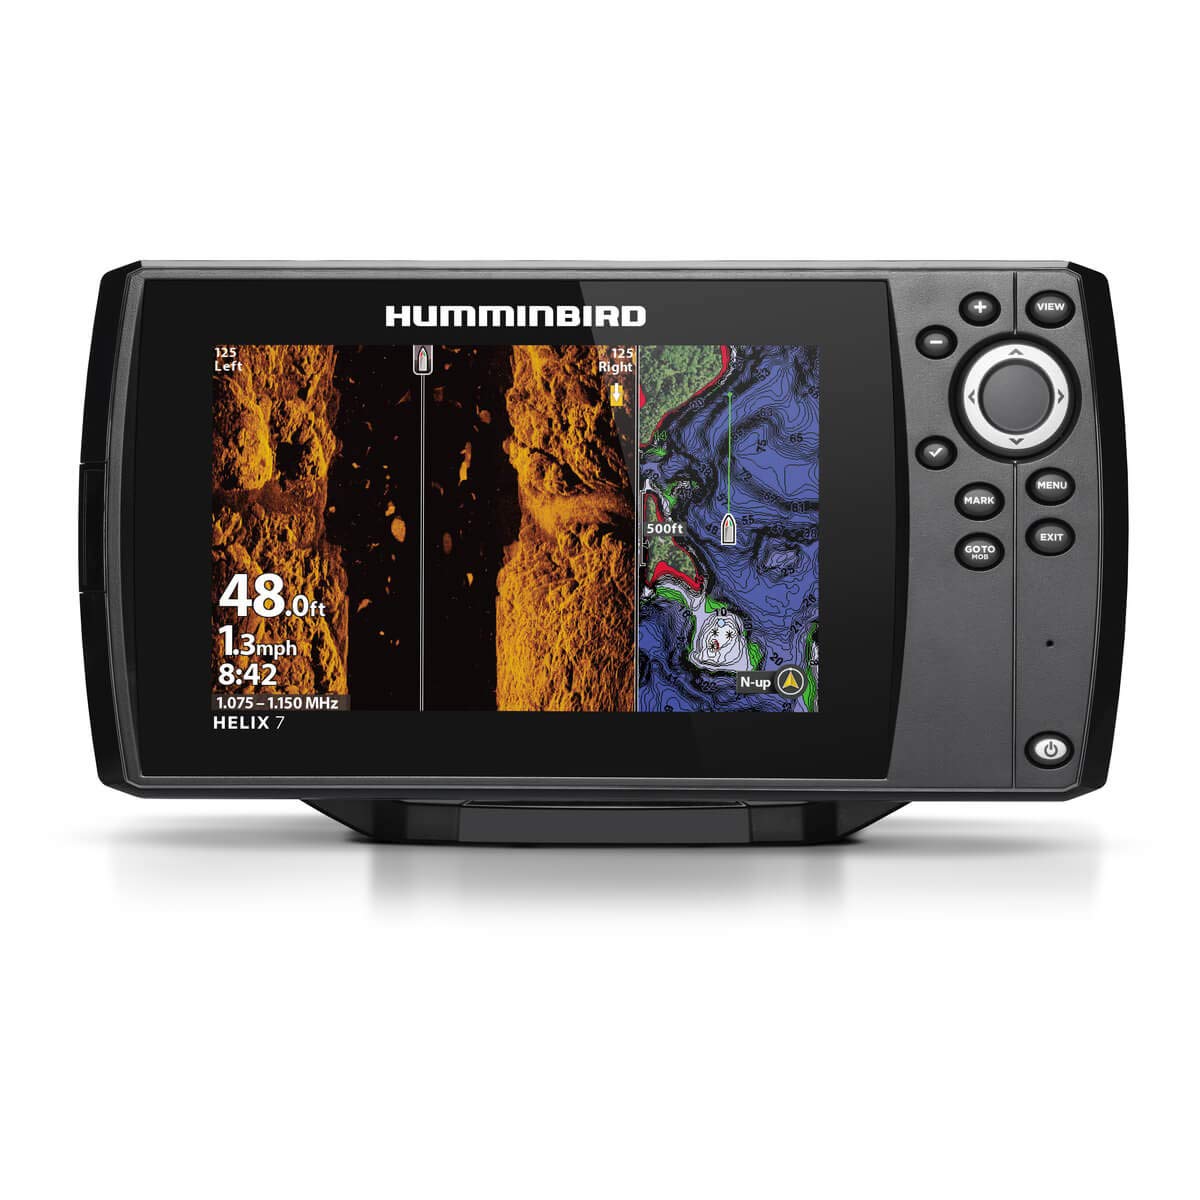 Humminbird 410950-1 HELIX 7 CHIRP MSI (MEGA Side Imaging) GPS G3 Fish Finder